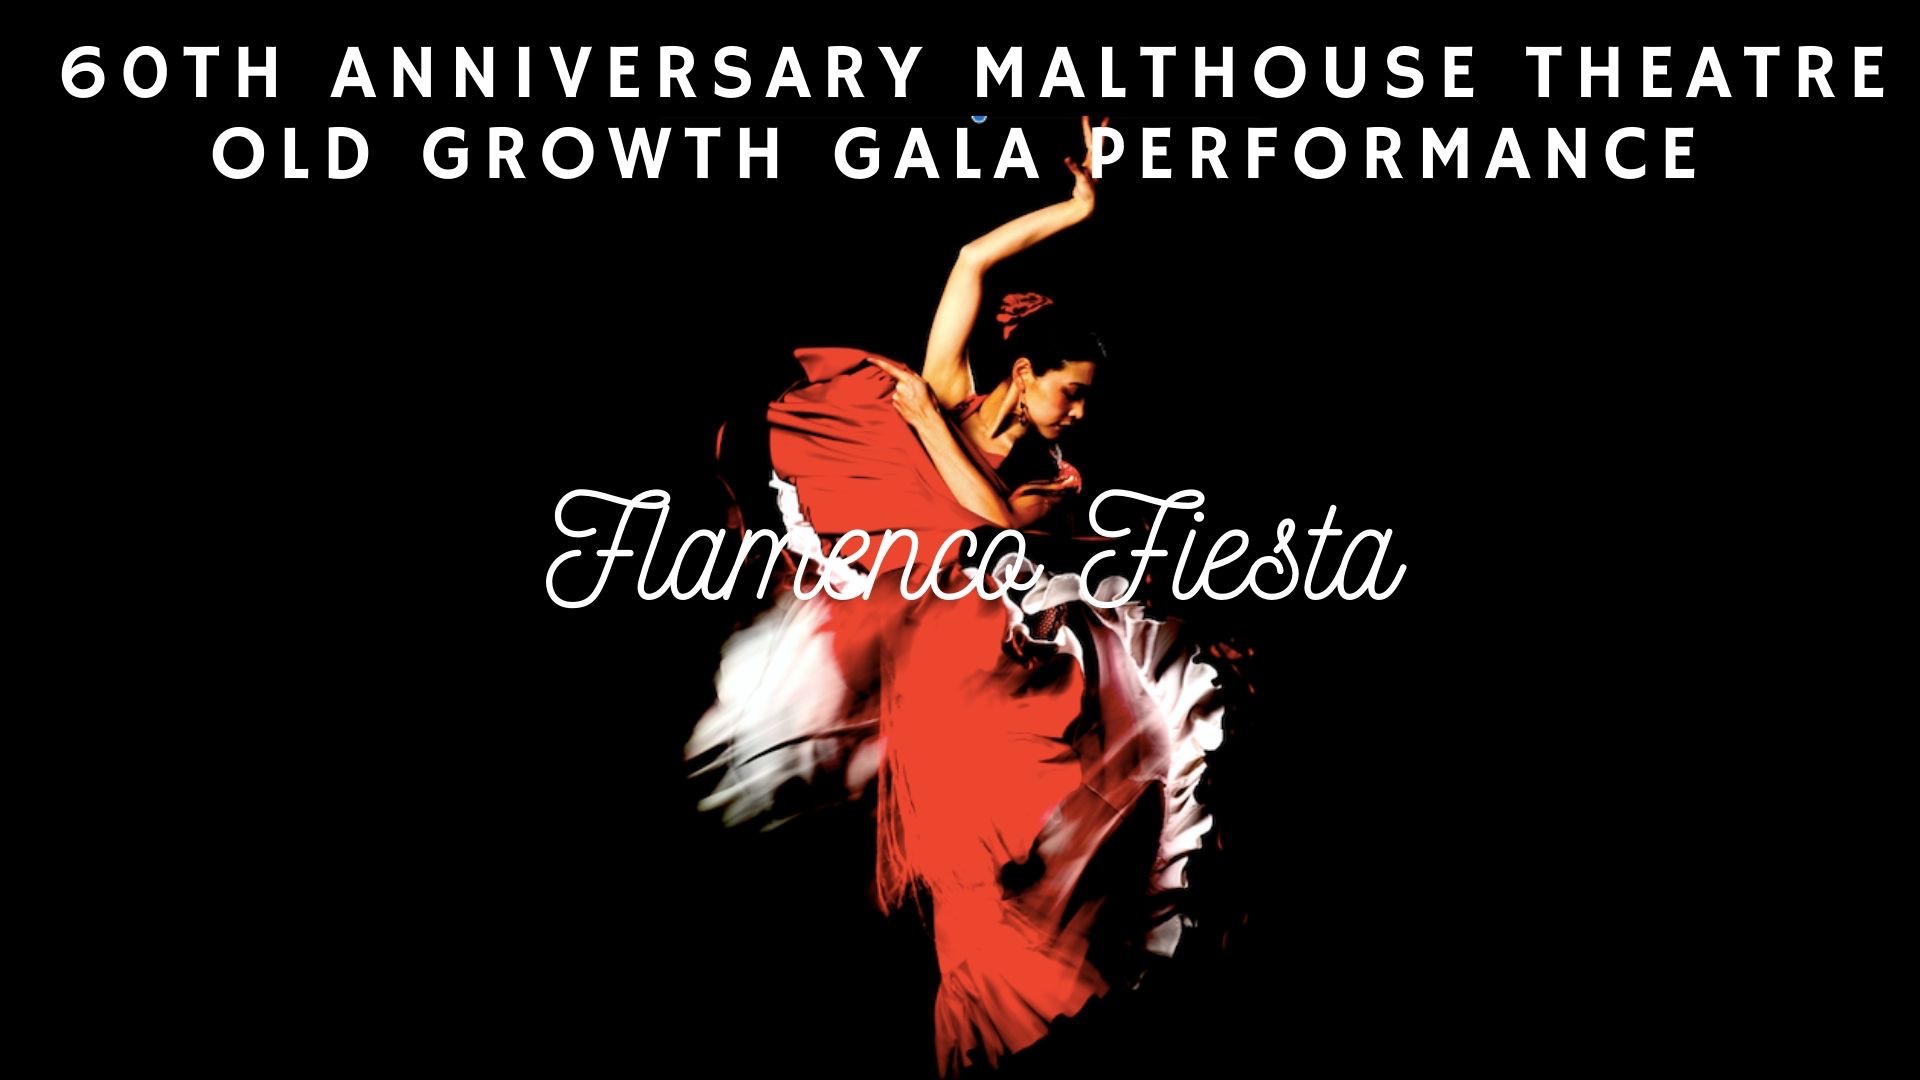 Utassy Ballet School's 60th Anniversary Malthouse Theatre Old Growth Gala Performance